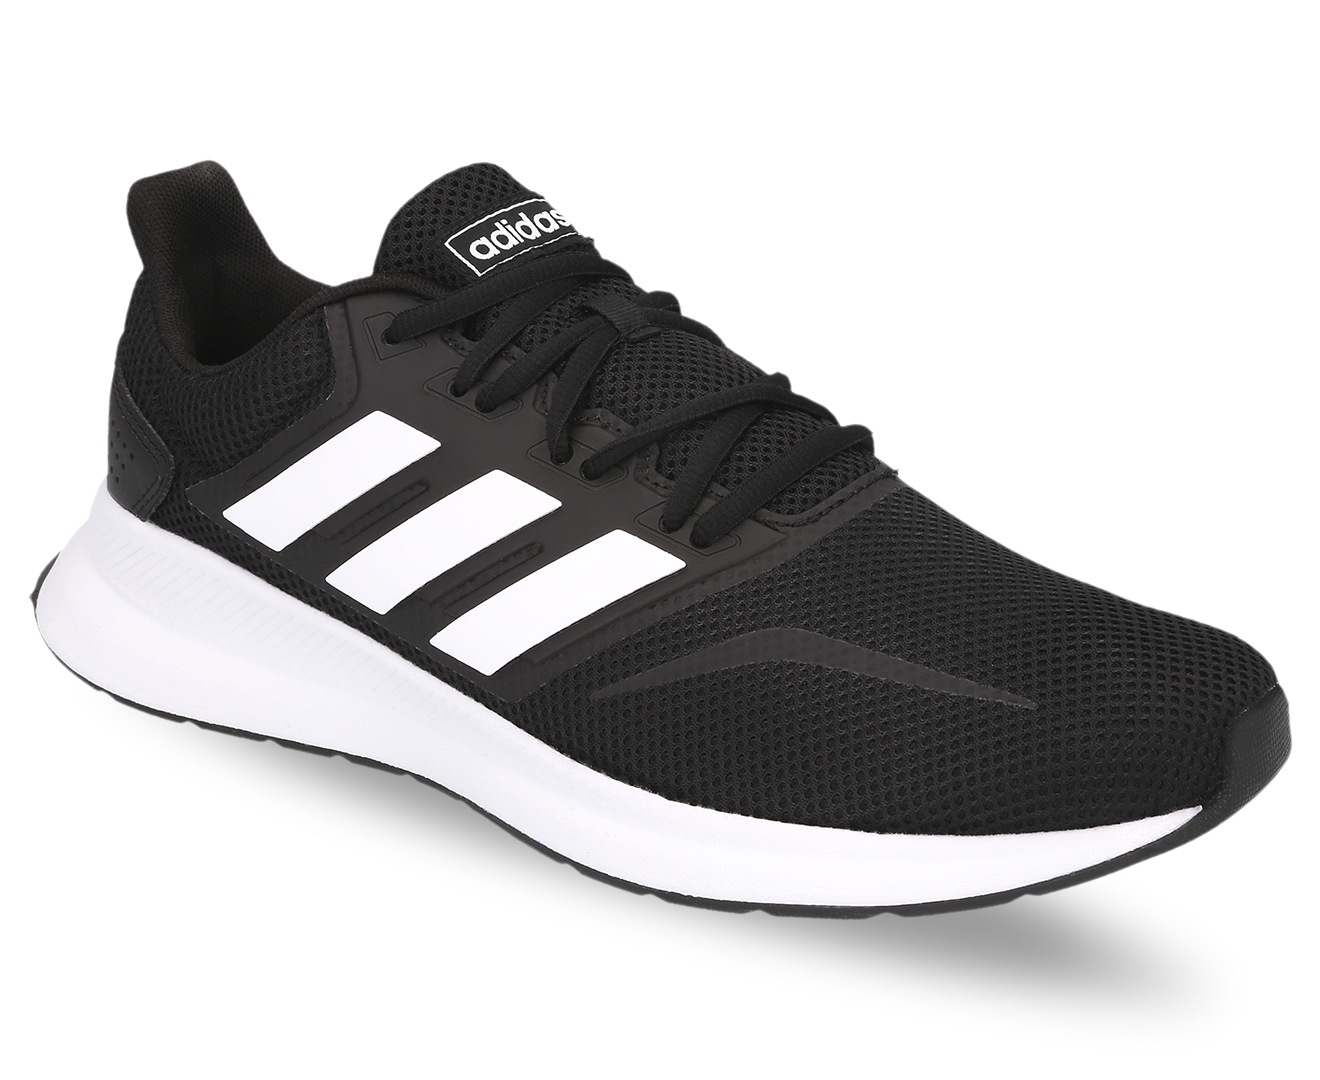 Adidas Men's Runfalcon Running Shoes - Core Black/White | Catch.com.au